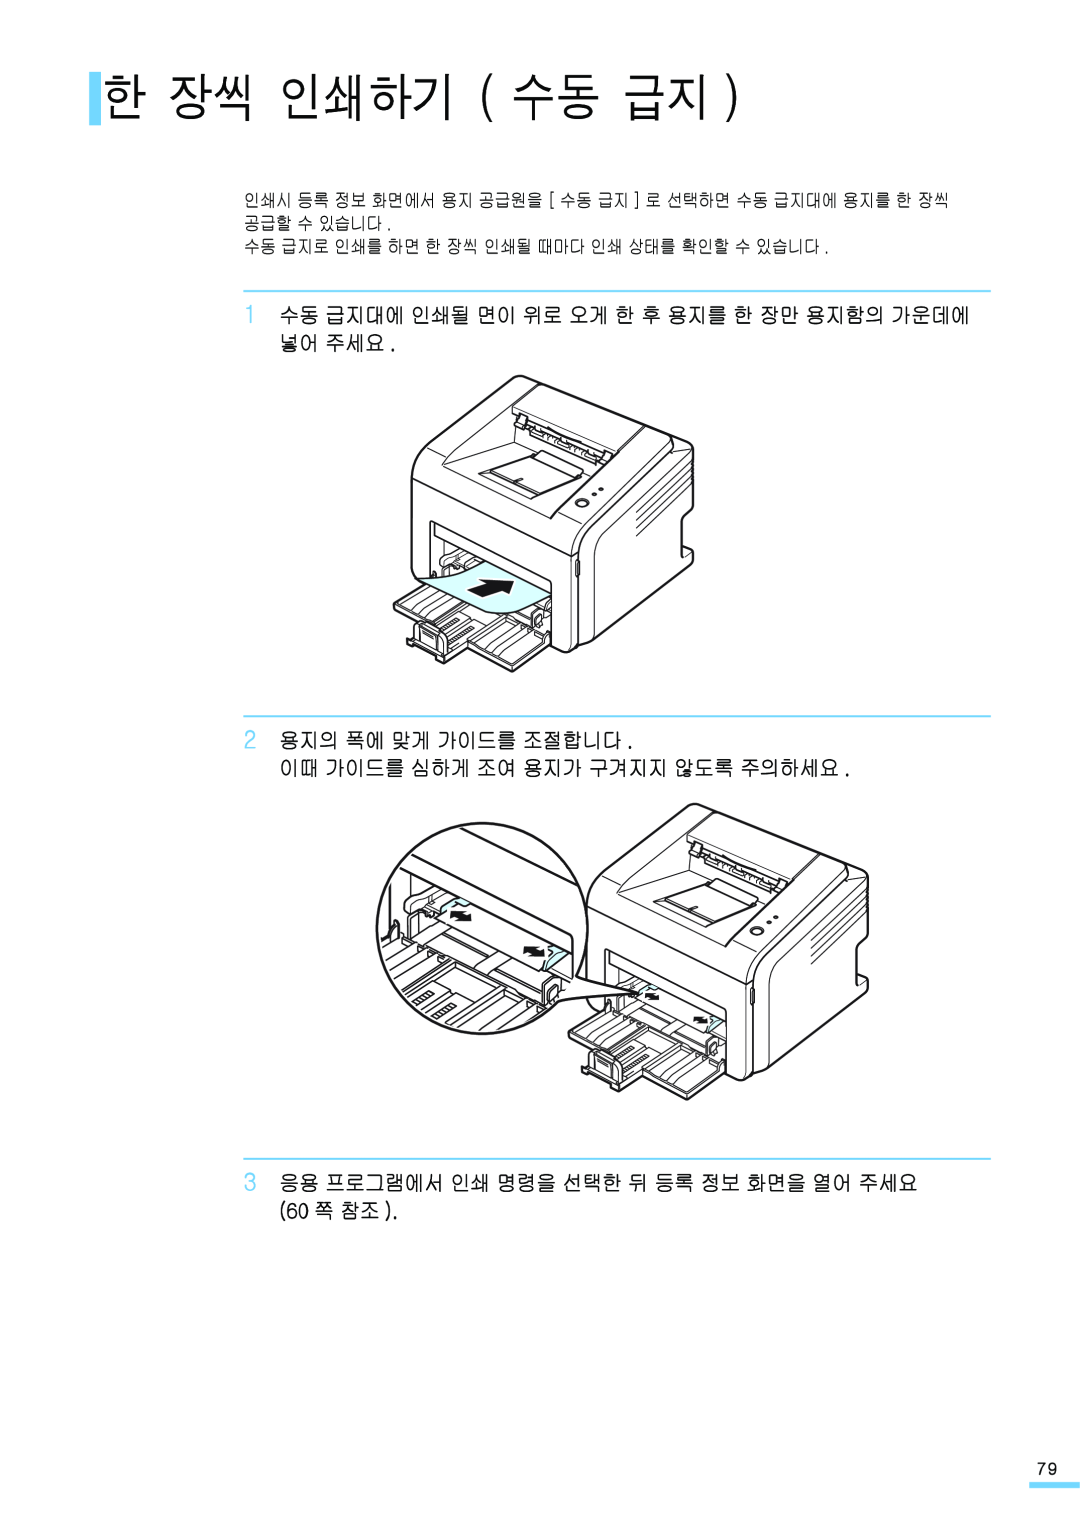 Samsung ML-2571N manual 한 장씩 인쇄하기 수동 급지, 1 수동 급지대에 인쇄될 면이 위로 오게 한 후 용지를 한 장만 용지함의 가운데에 넣어 주세요 